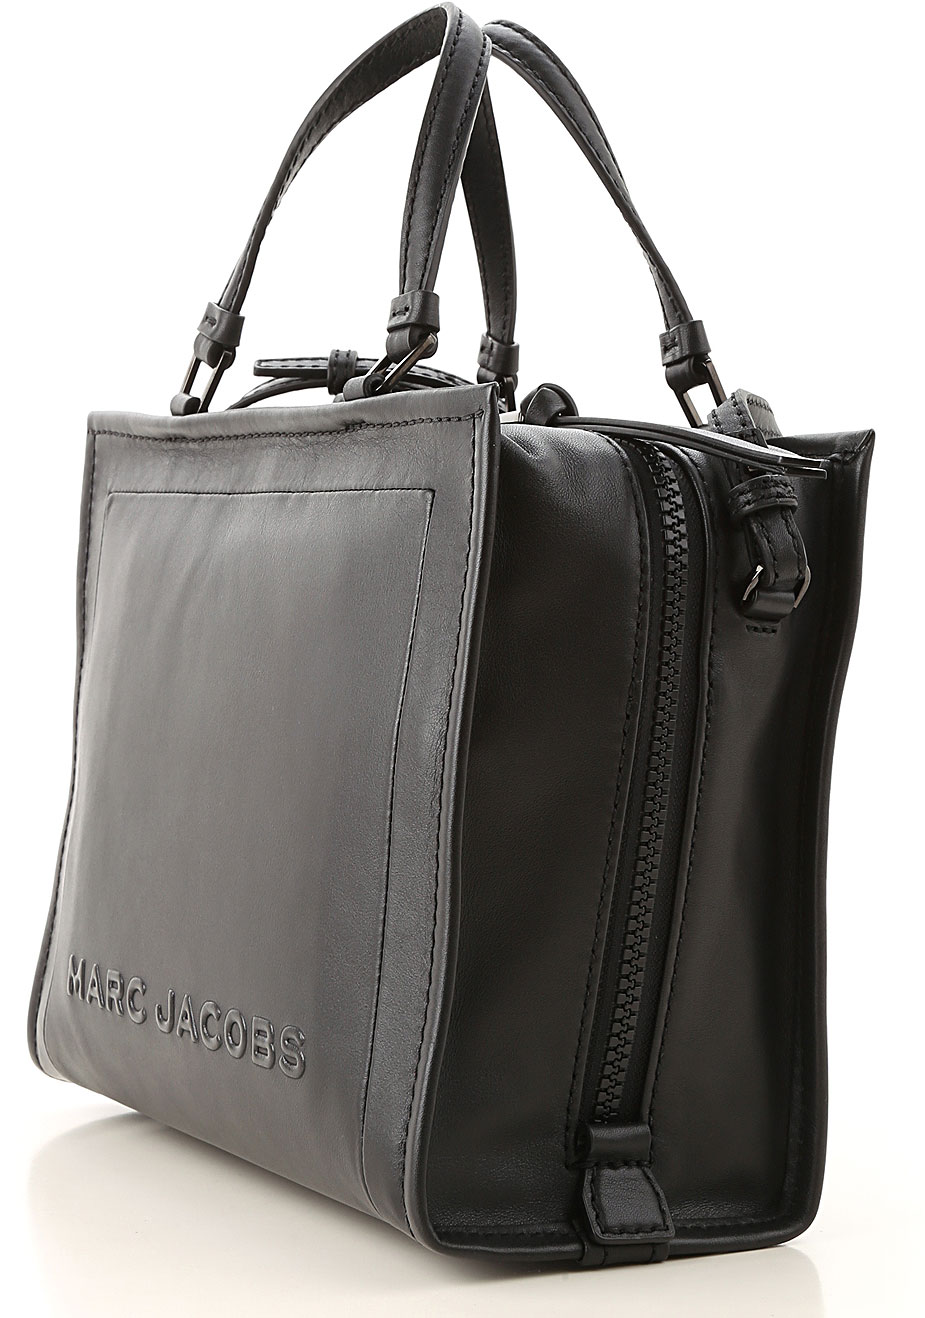 Handbags Marc Jacobs, Style code: m014496-001-